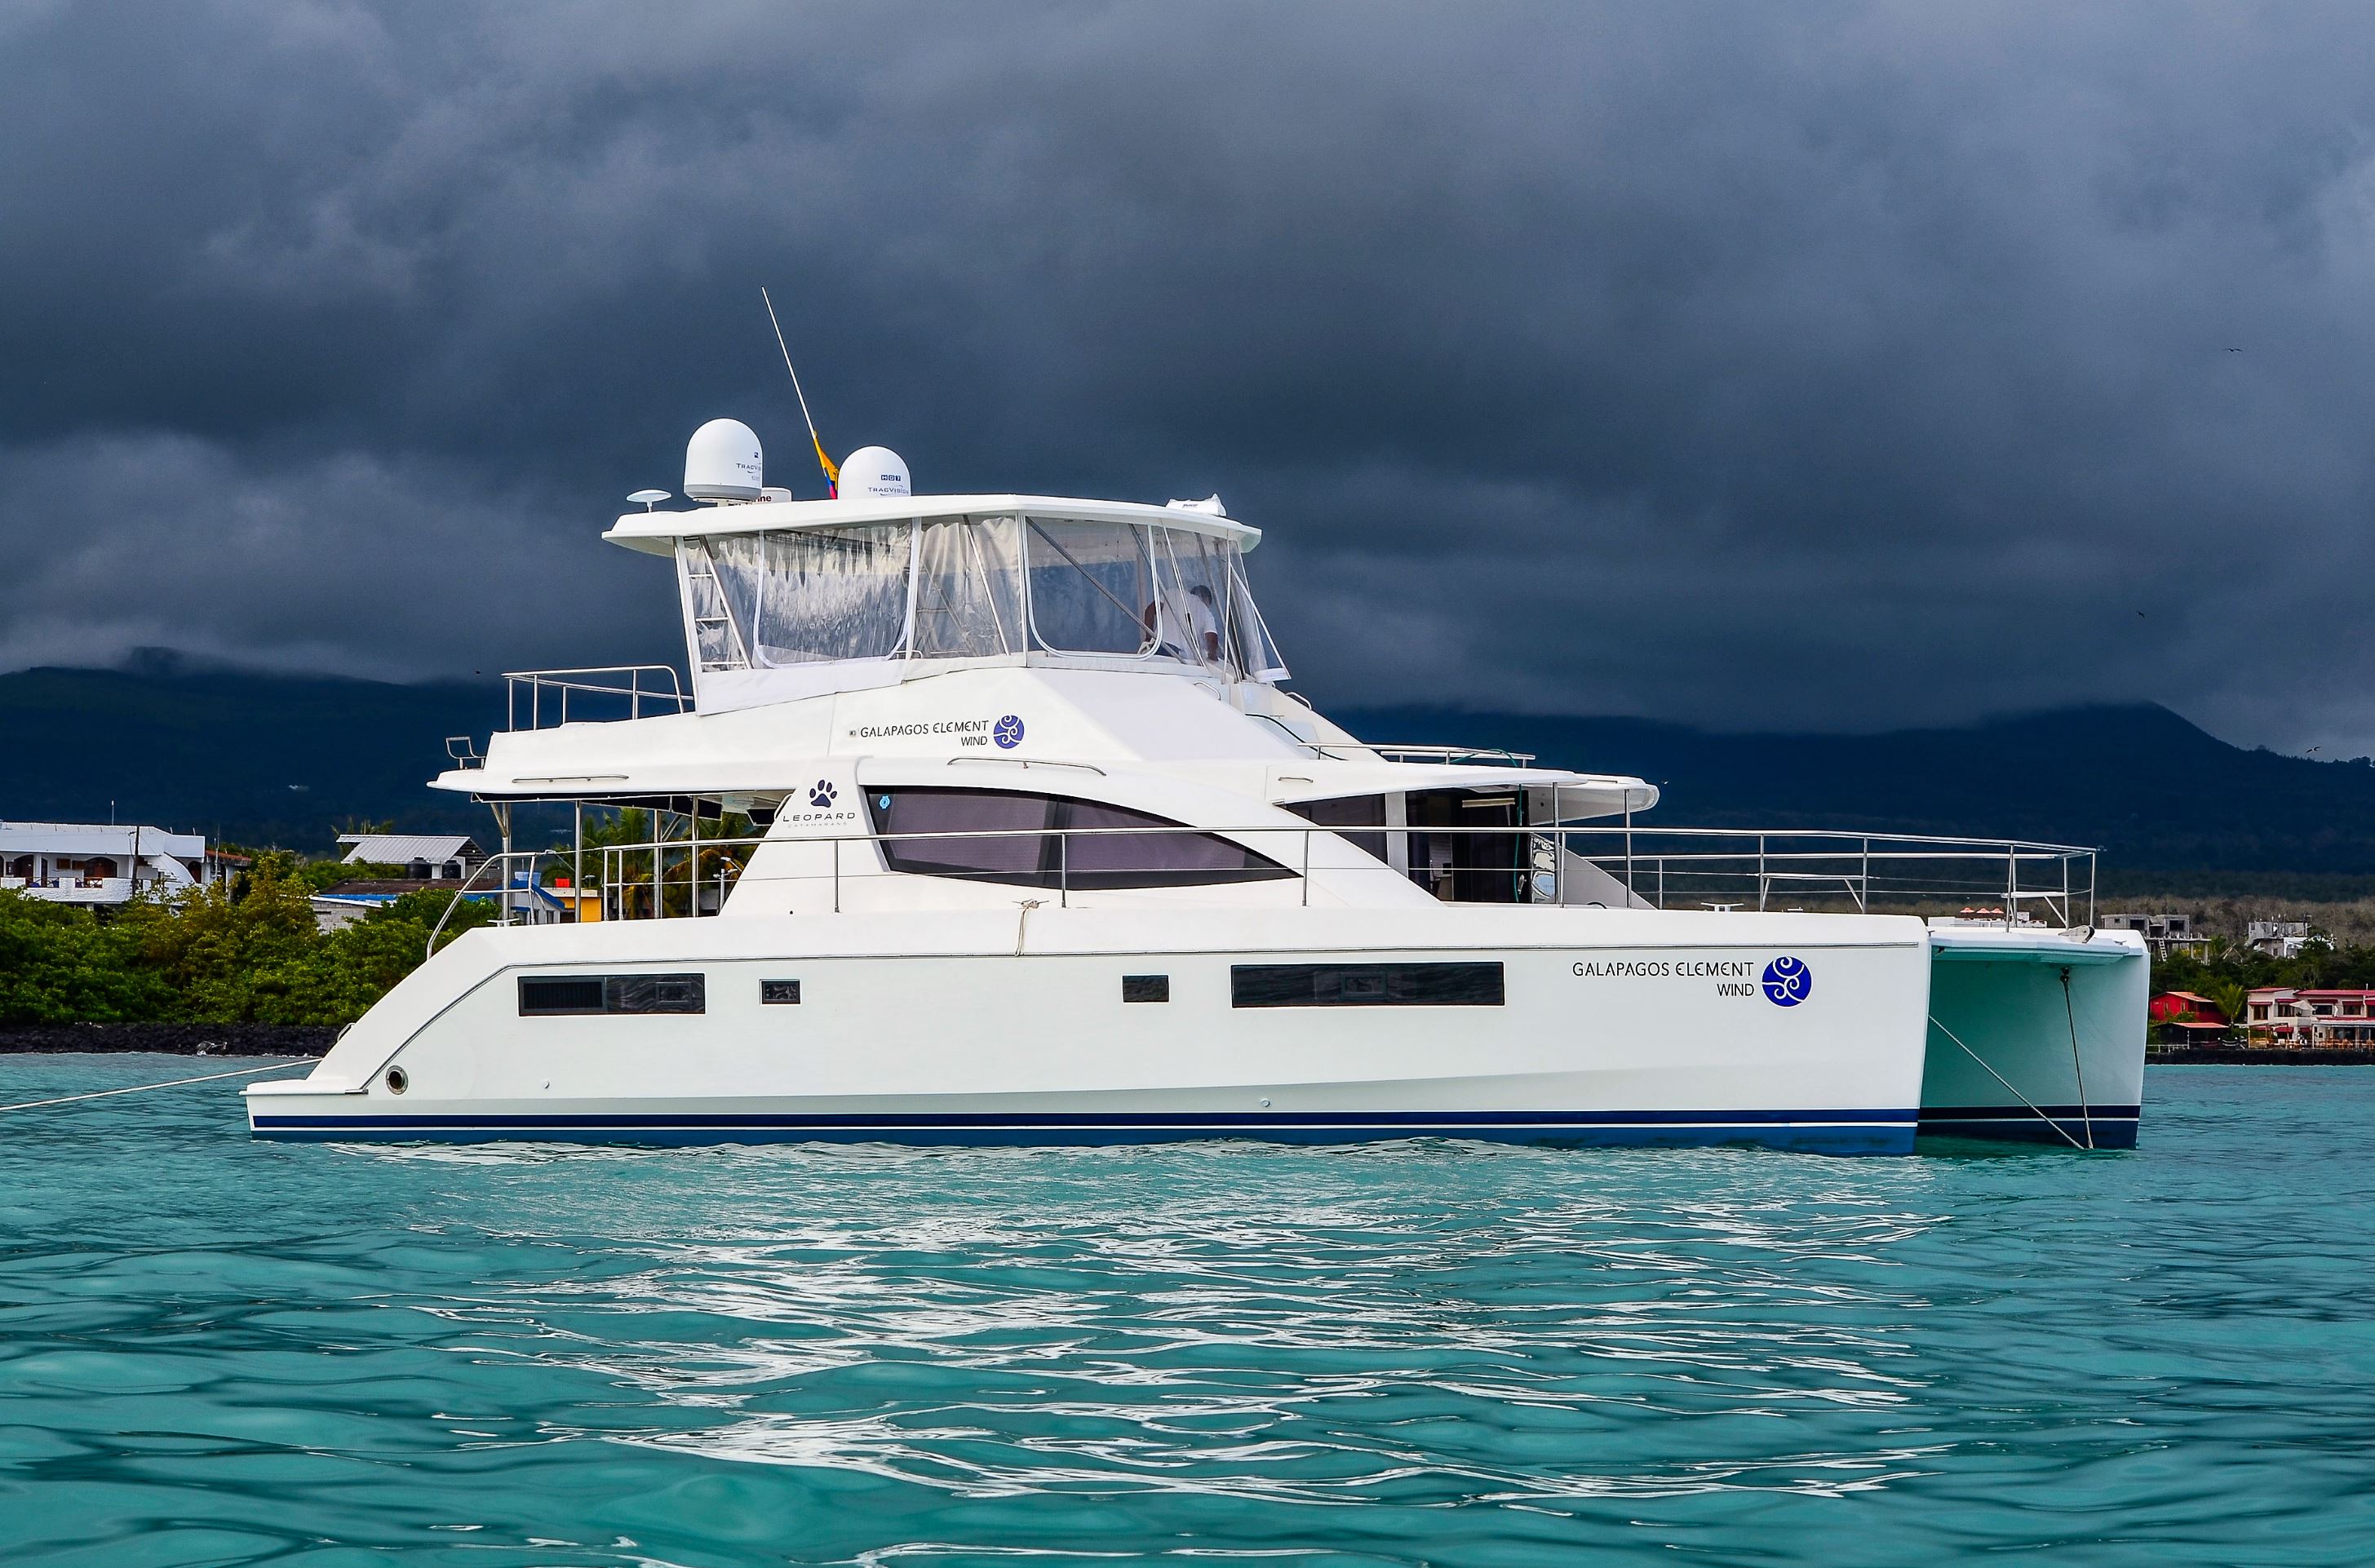 Galapagos Element Wind Yacht: Galapagos Element Wind Yacht, daily Galapagos tours to Floreana, Isabela or San Cristobal Island